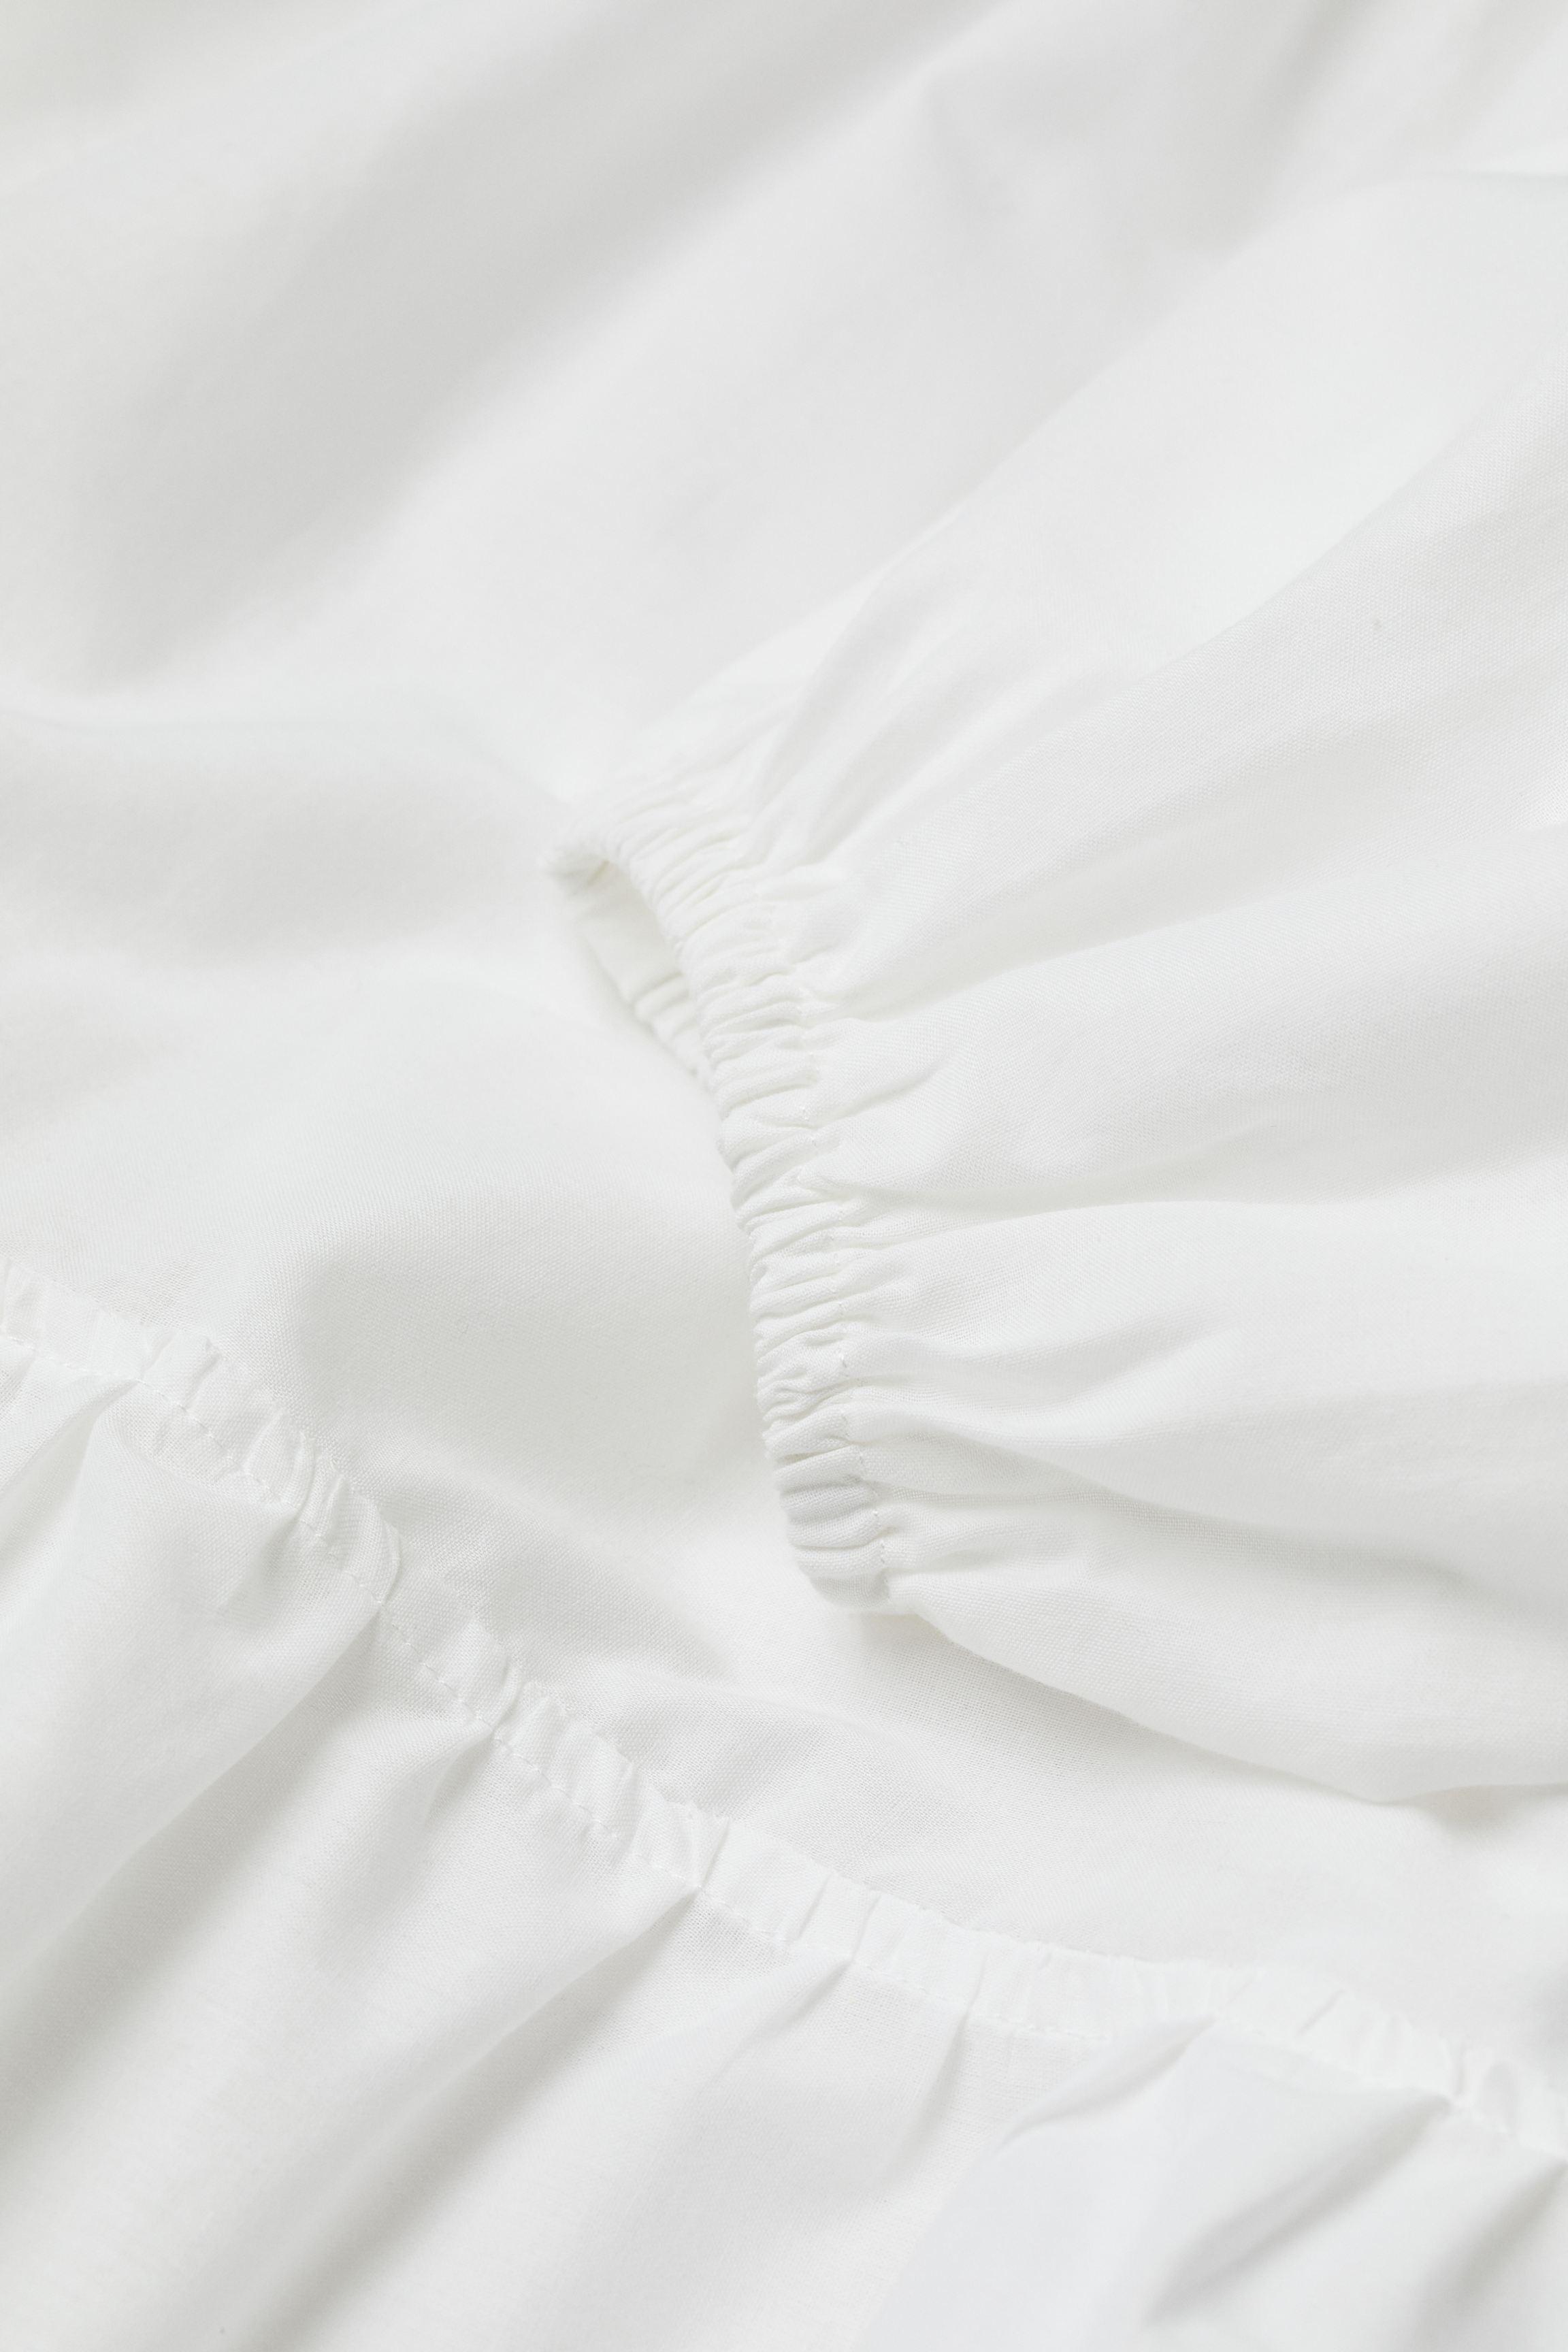 H&M Poplin Beach Dress in White - Lyst